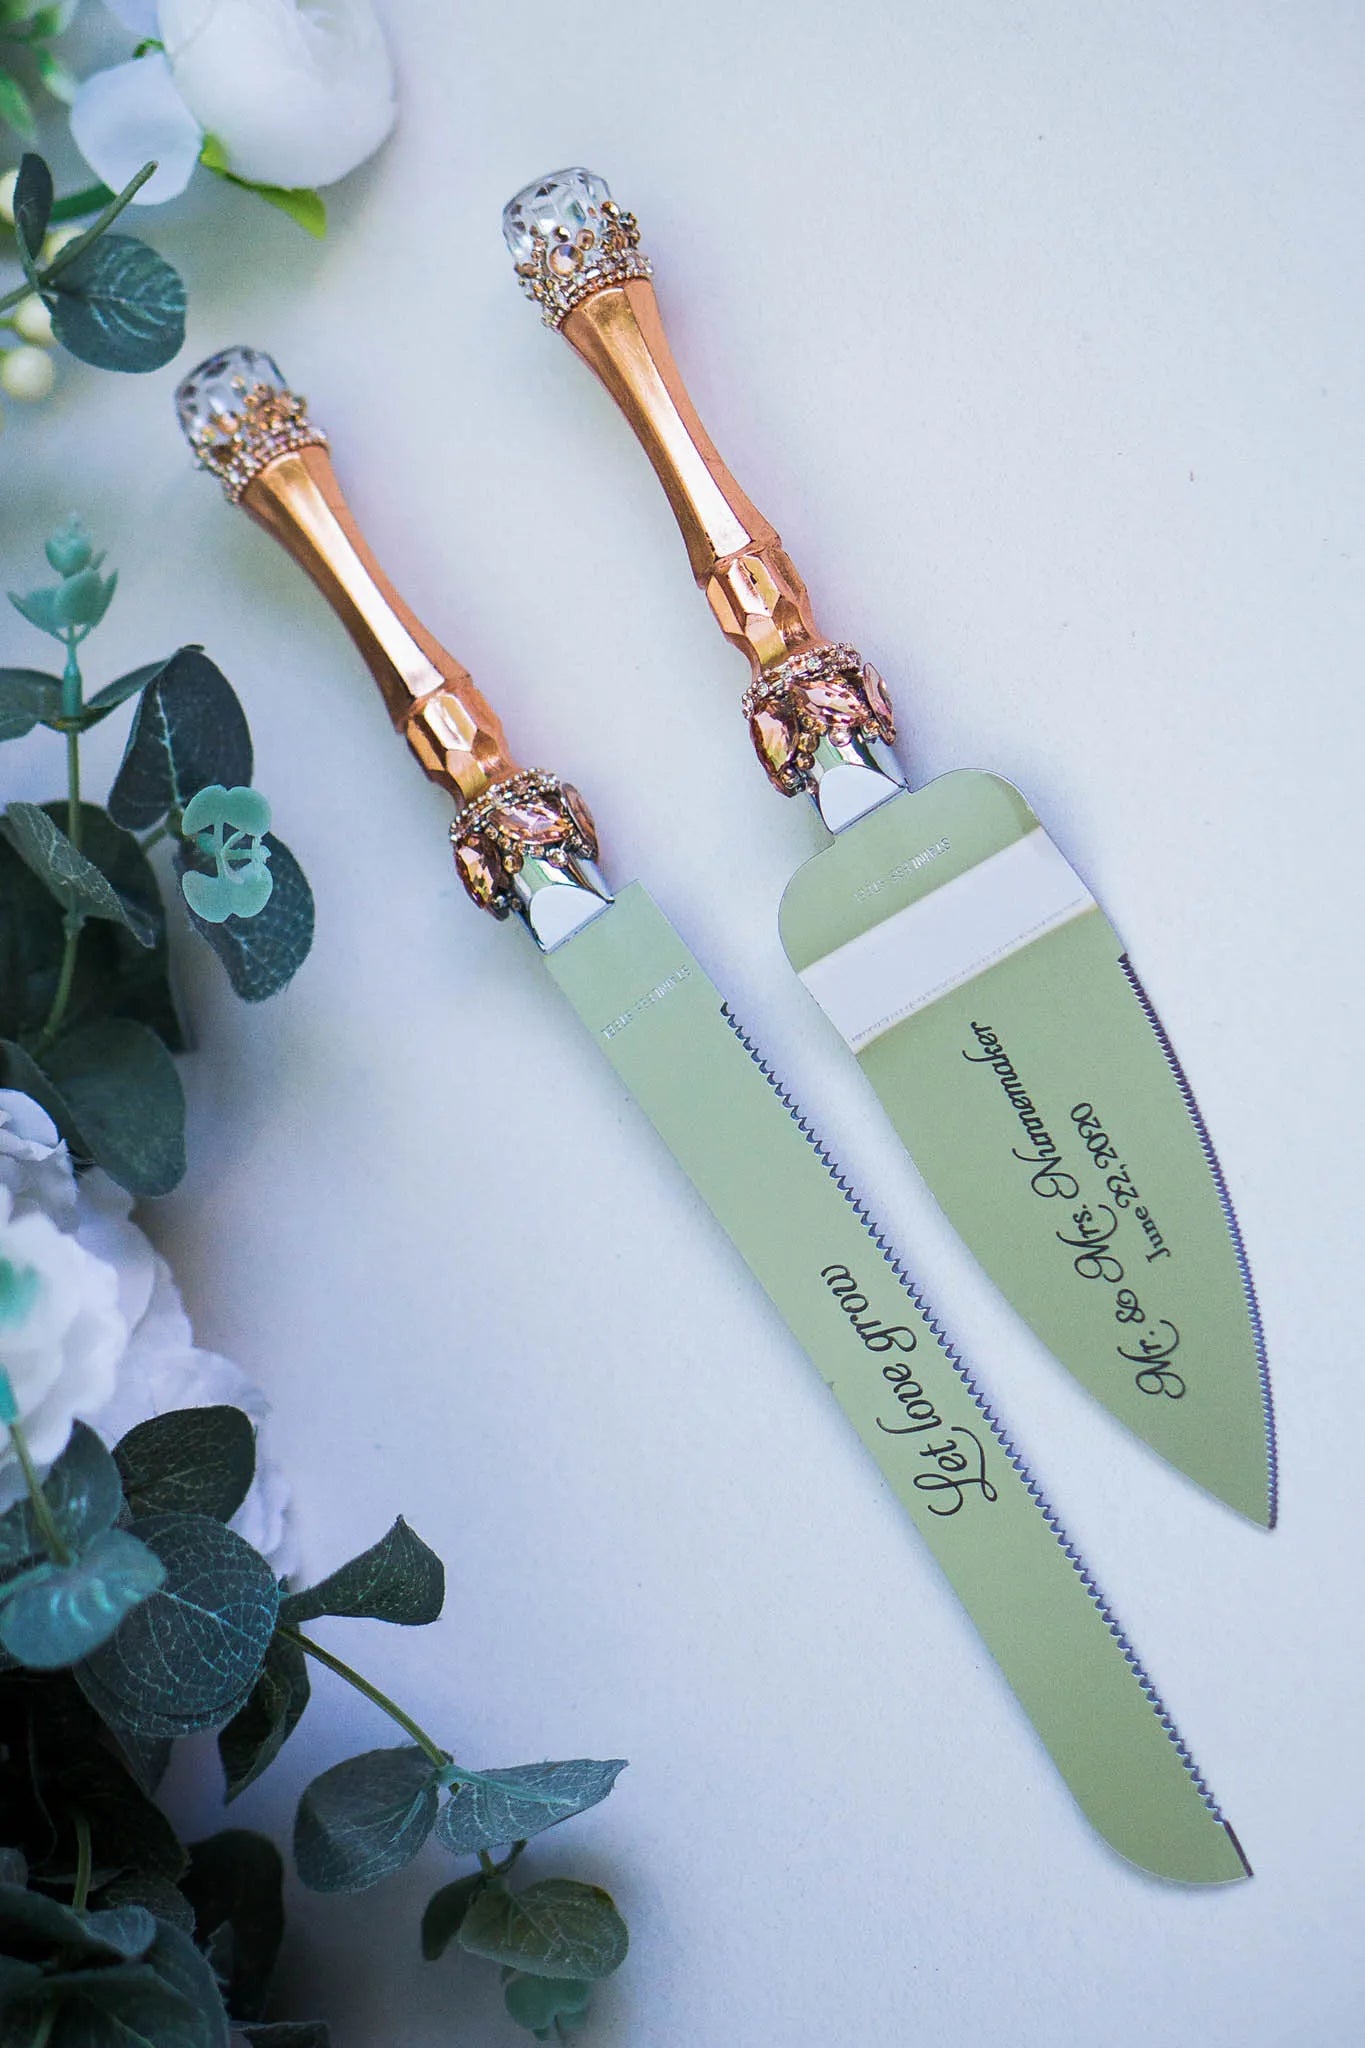 Victoria Rose Gold wedding utensils ensemble